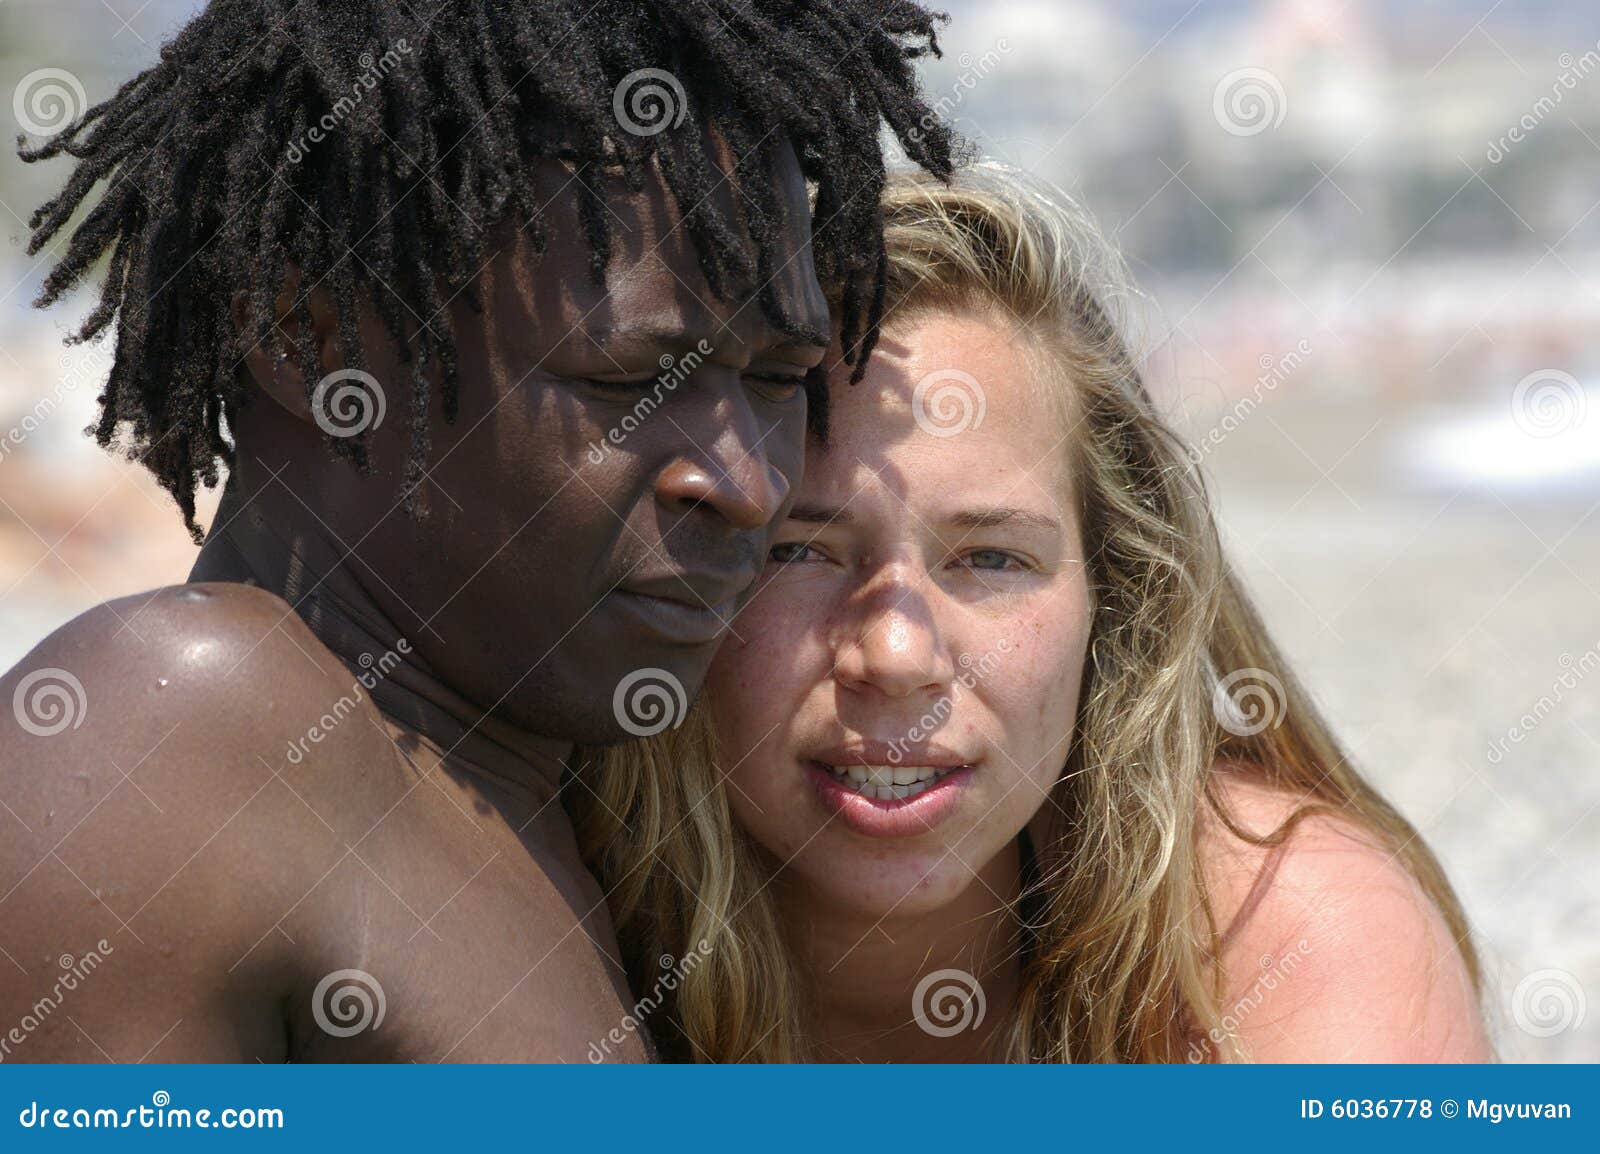 Black couple white girl